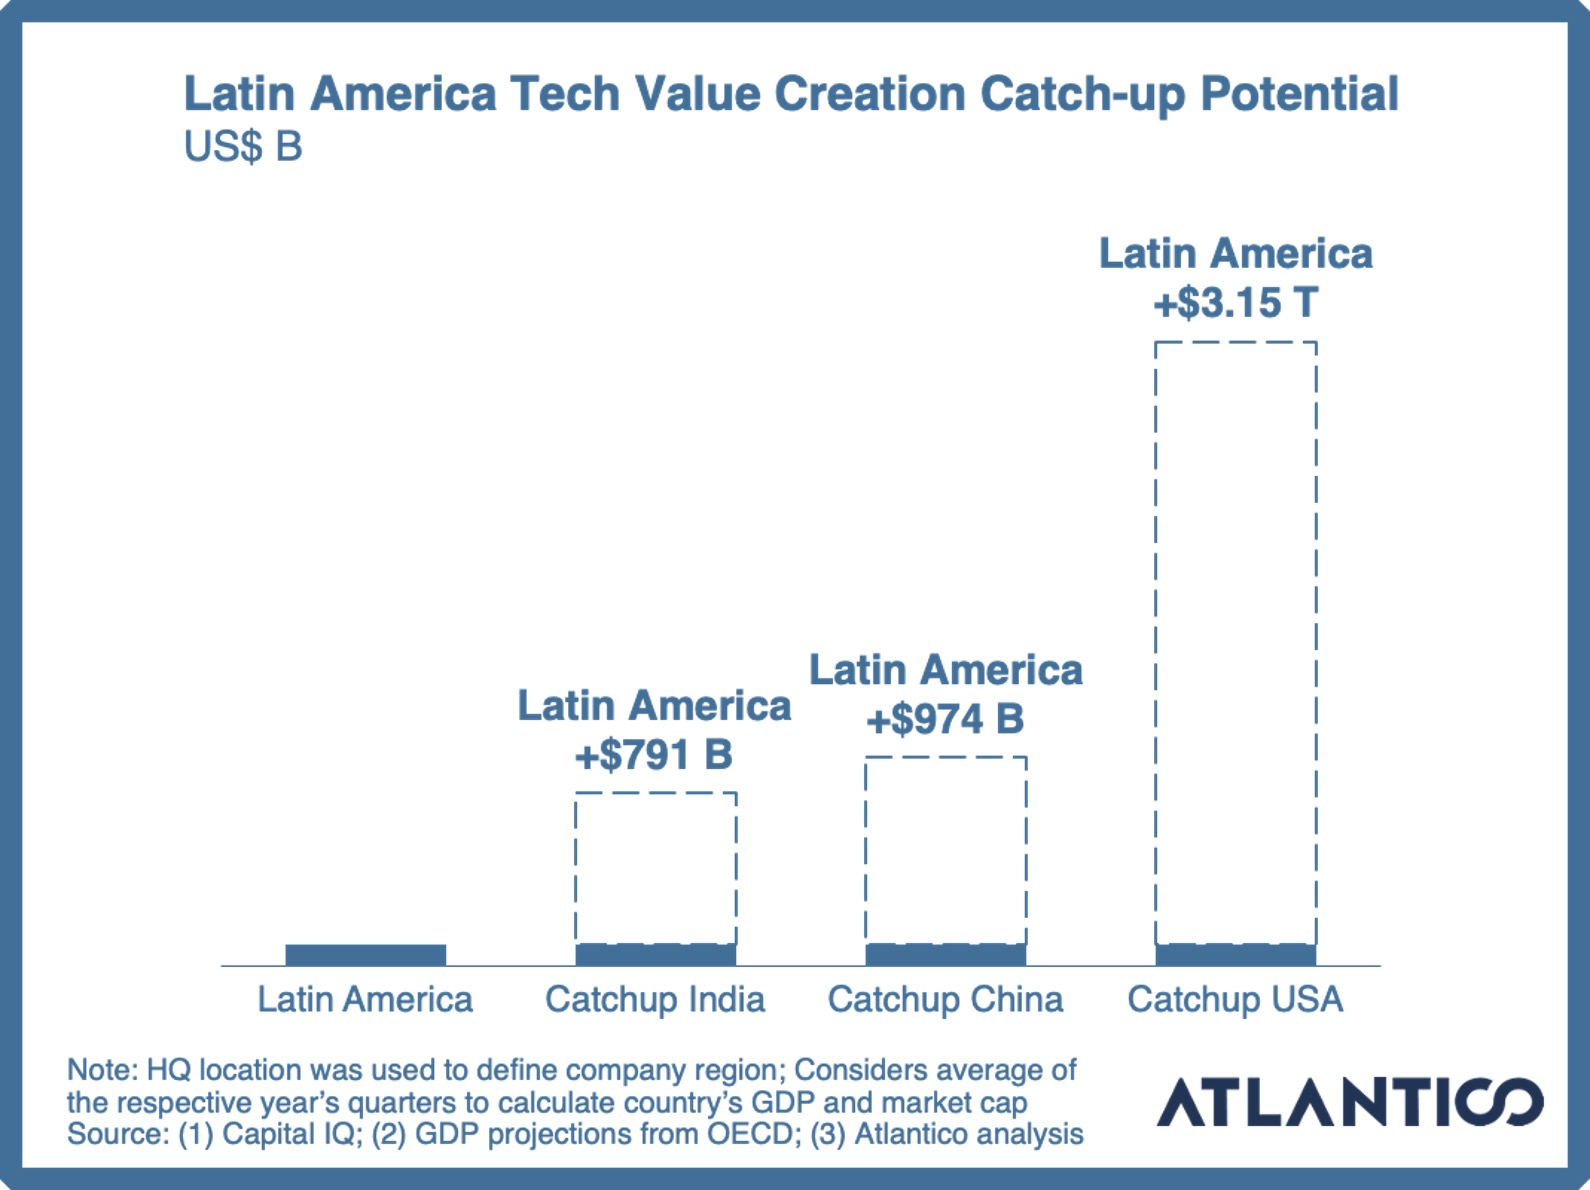 Latin America tech value creation potential.